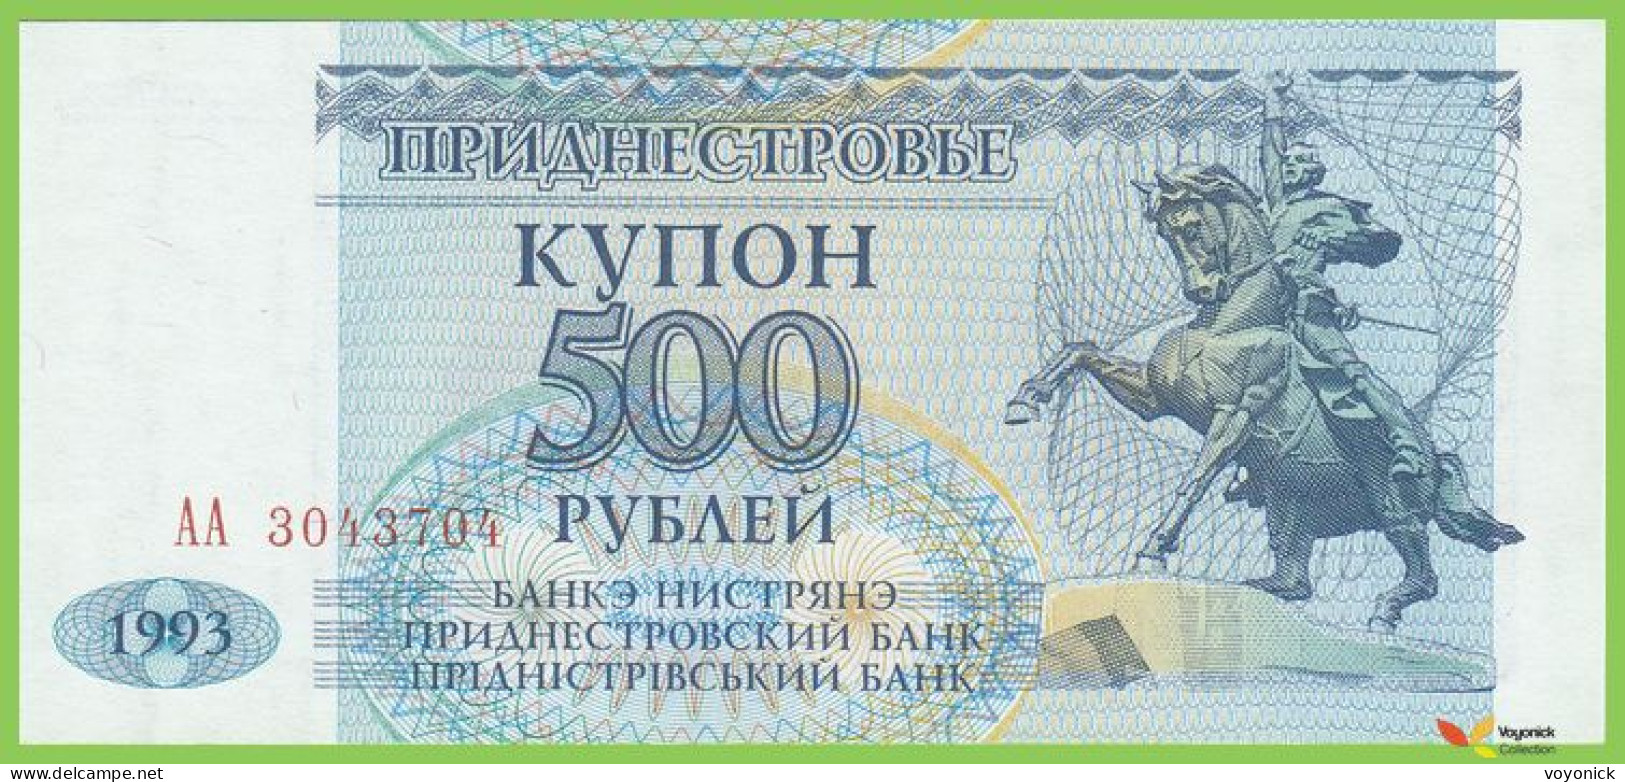 Voyo MOLDOVA (Transdniester) 500 Rubley 1993(1994) P22 B124a АA UNC - Moldavie